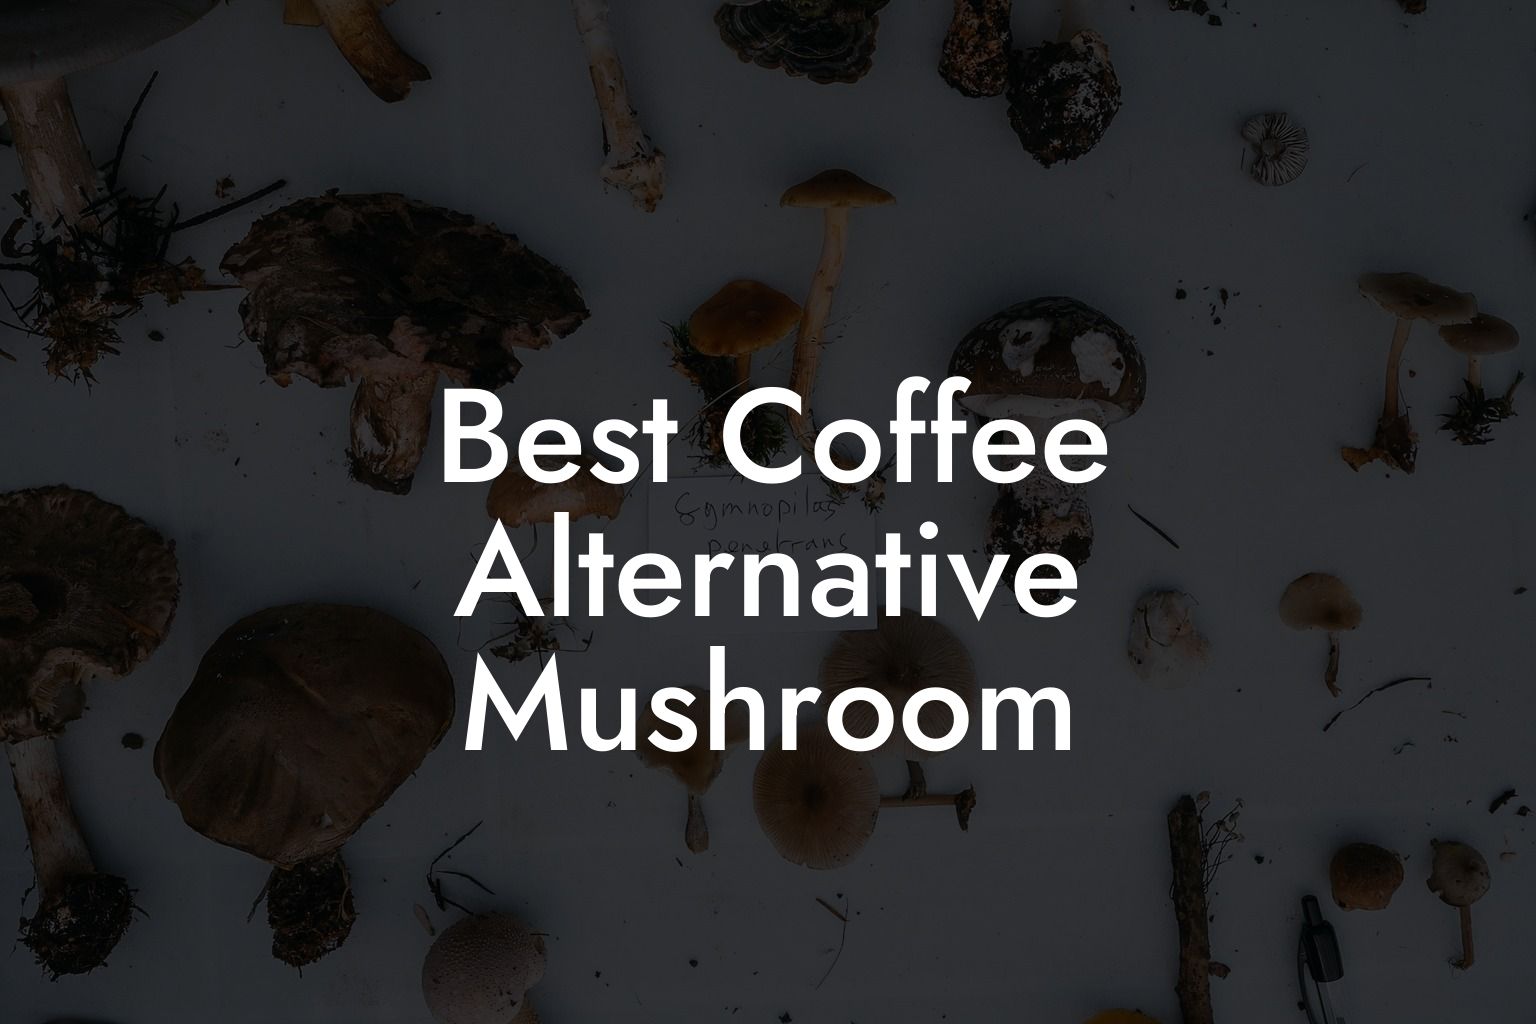 Best Coffee Alternative Mushroom